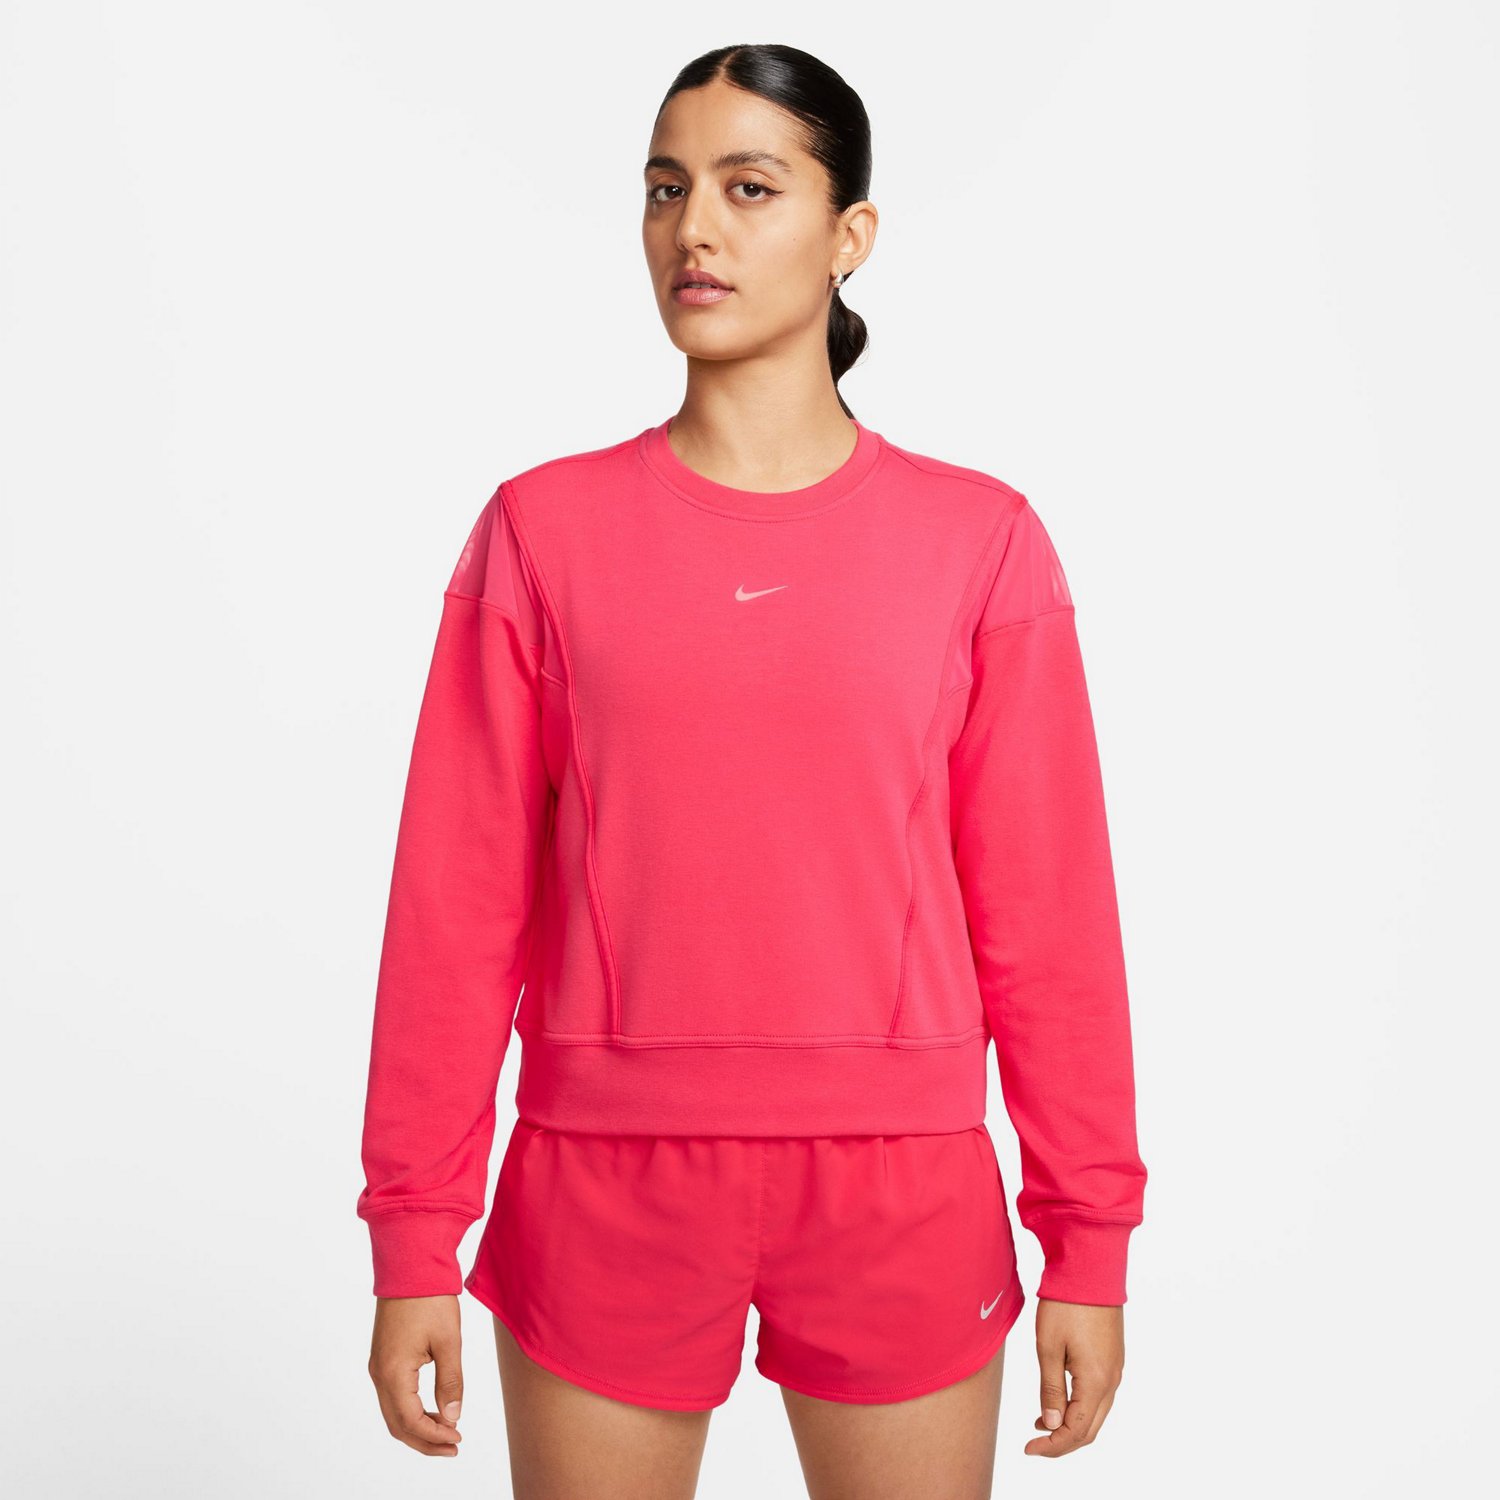 Nike Women's Dri-FIT One Crew Neck Long Sleeve Top | Academy